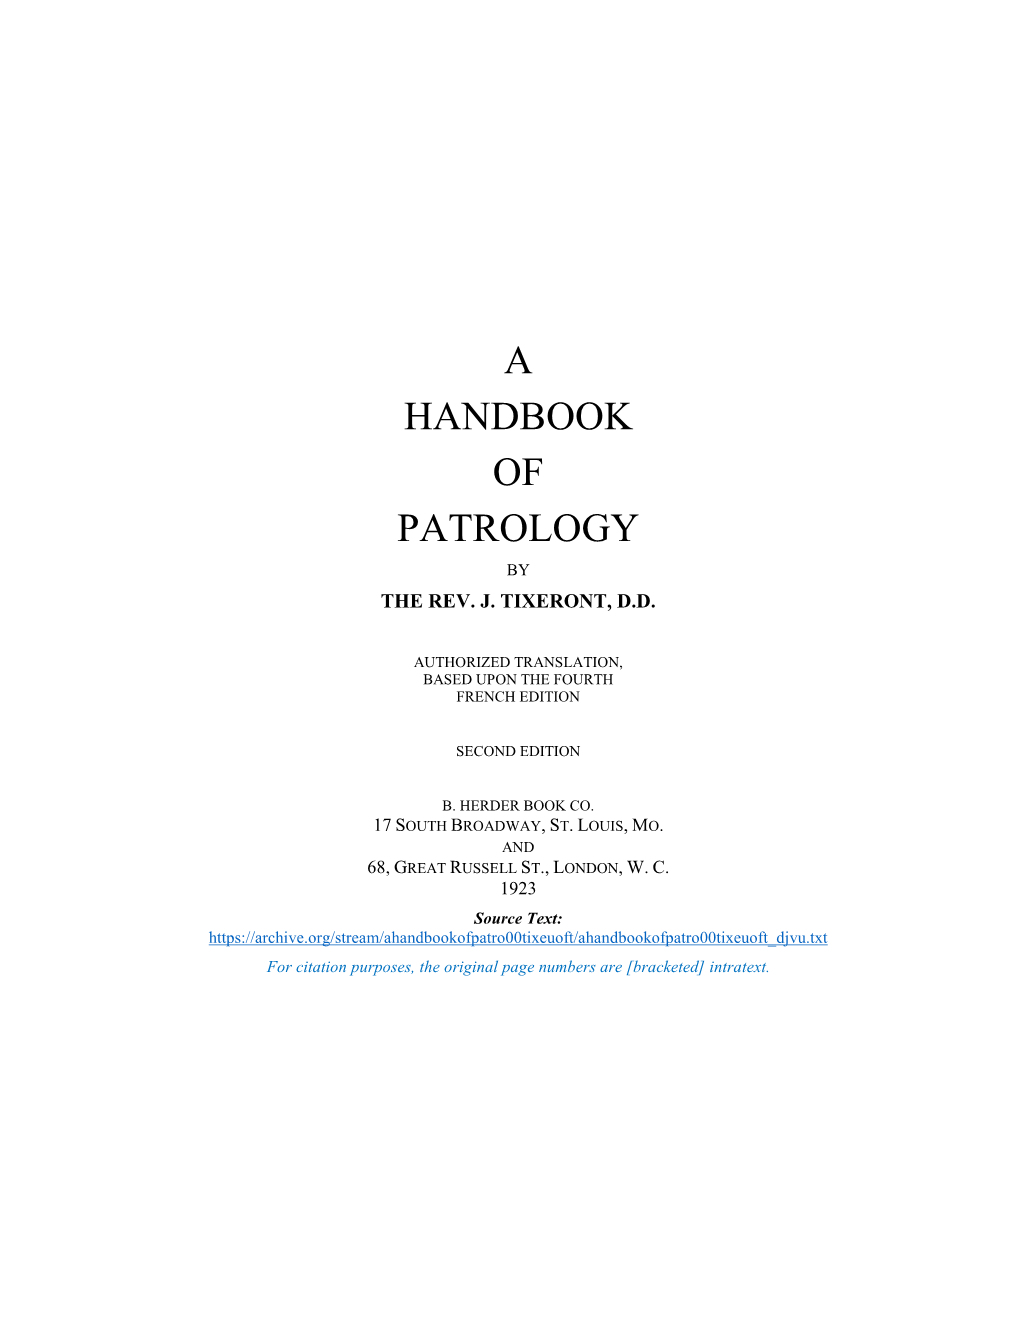 A Handbook of Patrology by the Rev